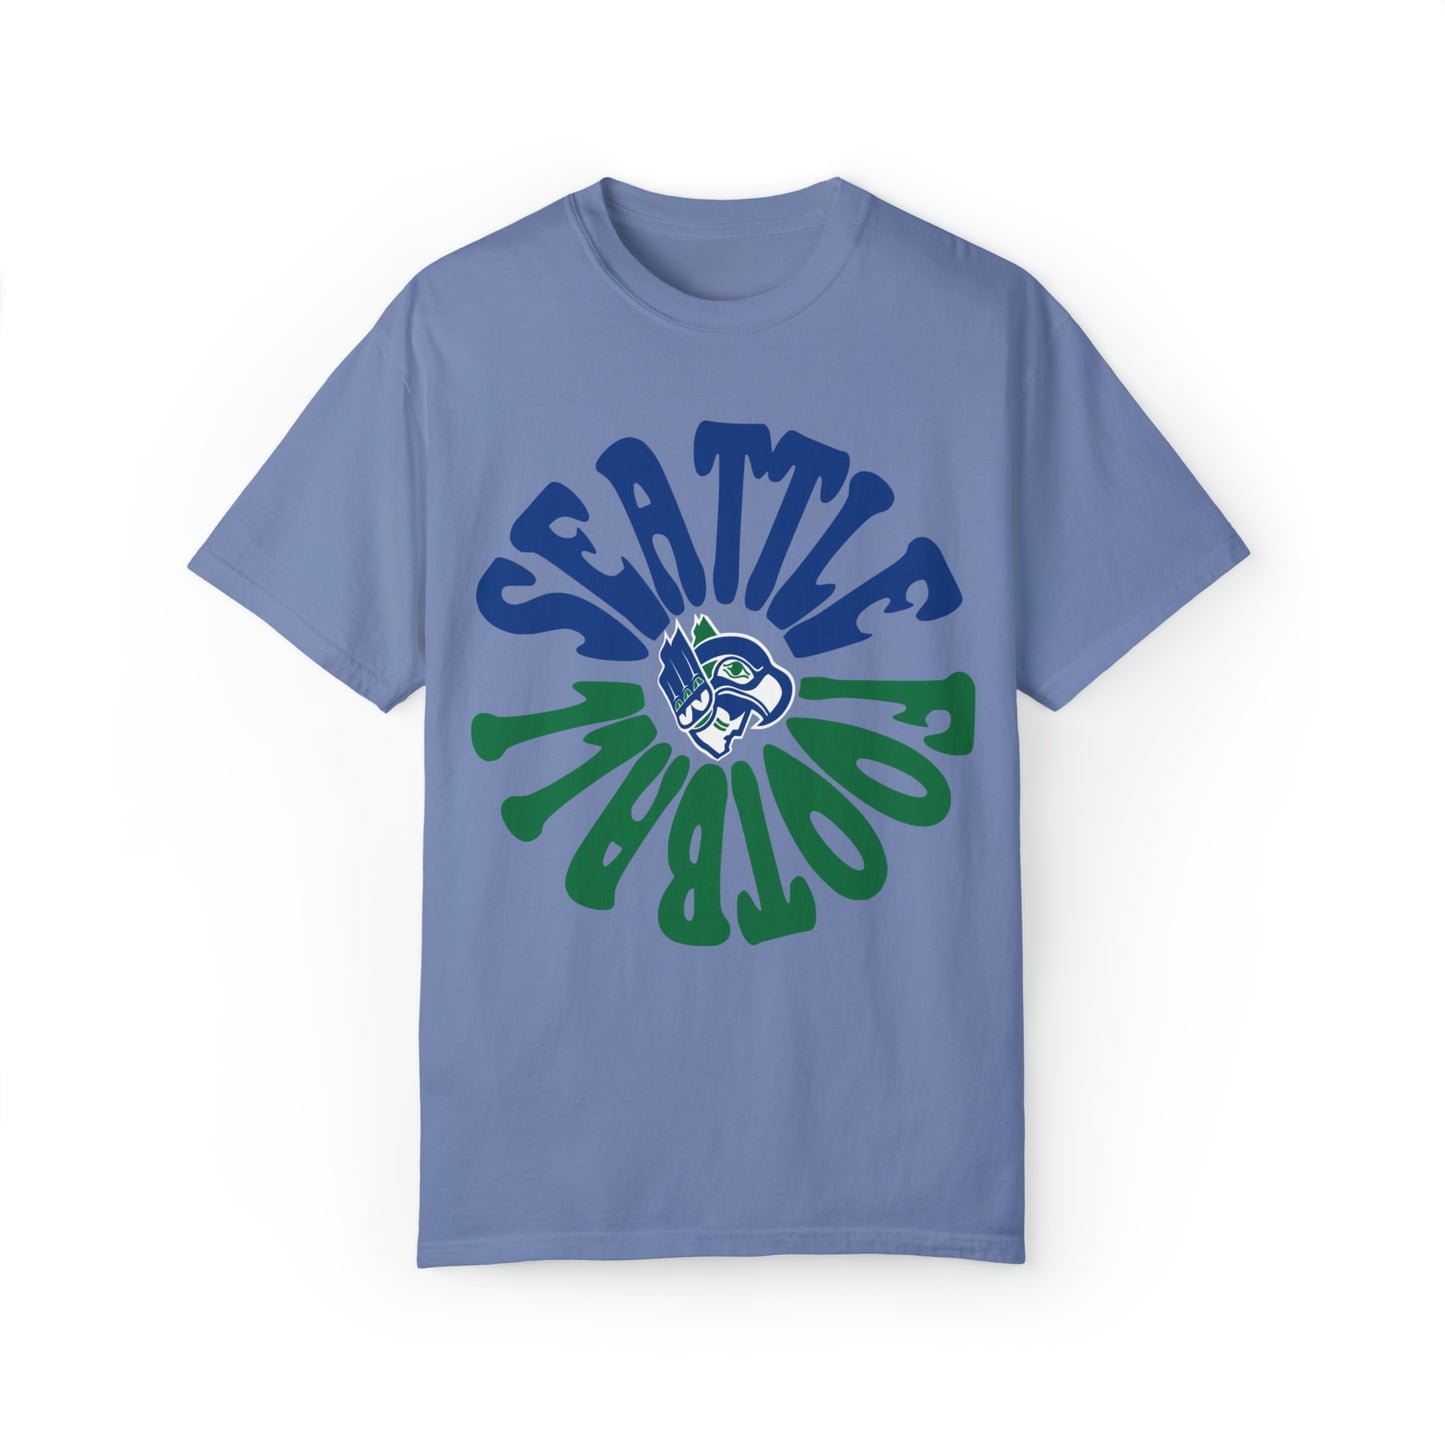 Hippy Retro Seattle Seahawks Comfort Colors T-Shirt - Vintage Style Football Crewneck - Men's & Women's - Design 2